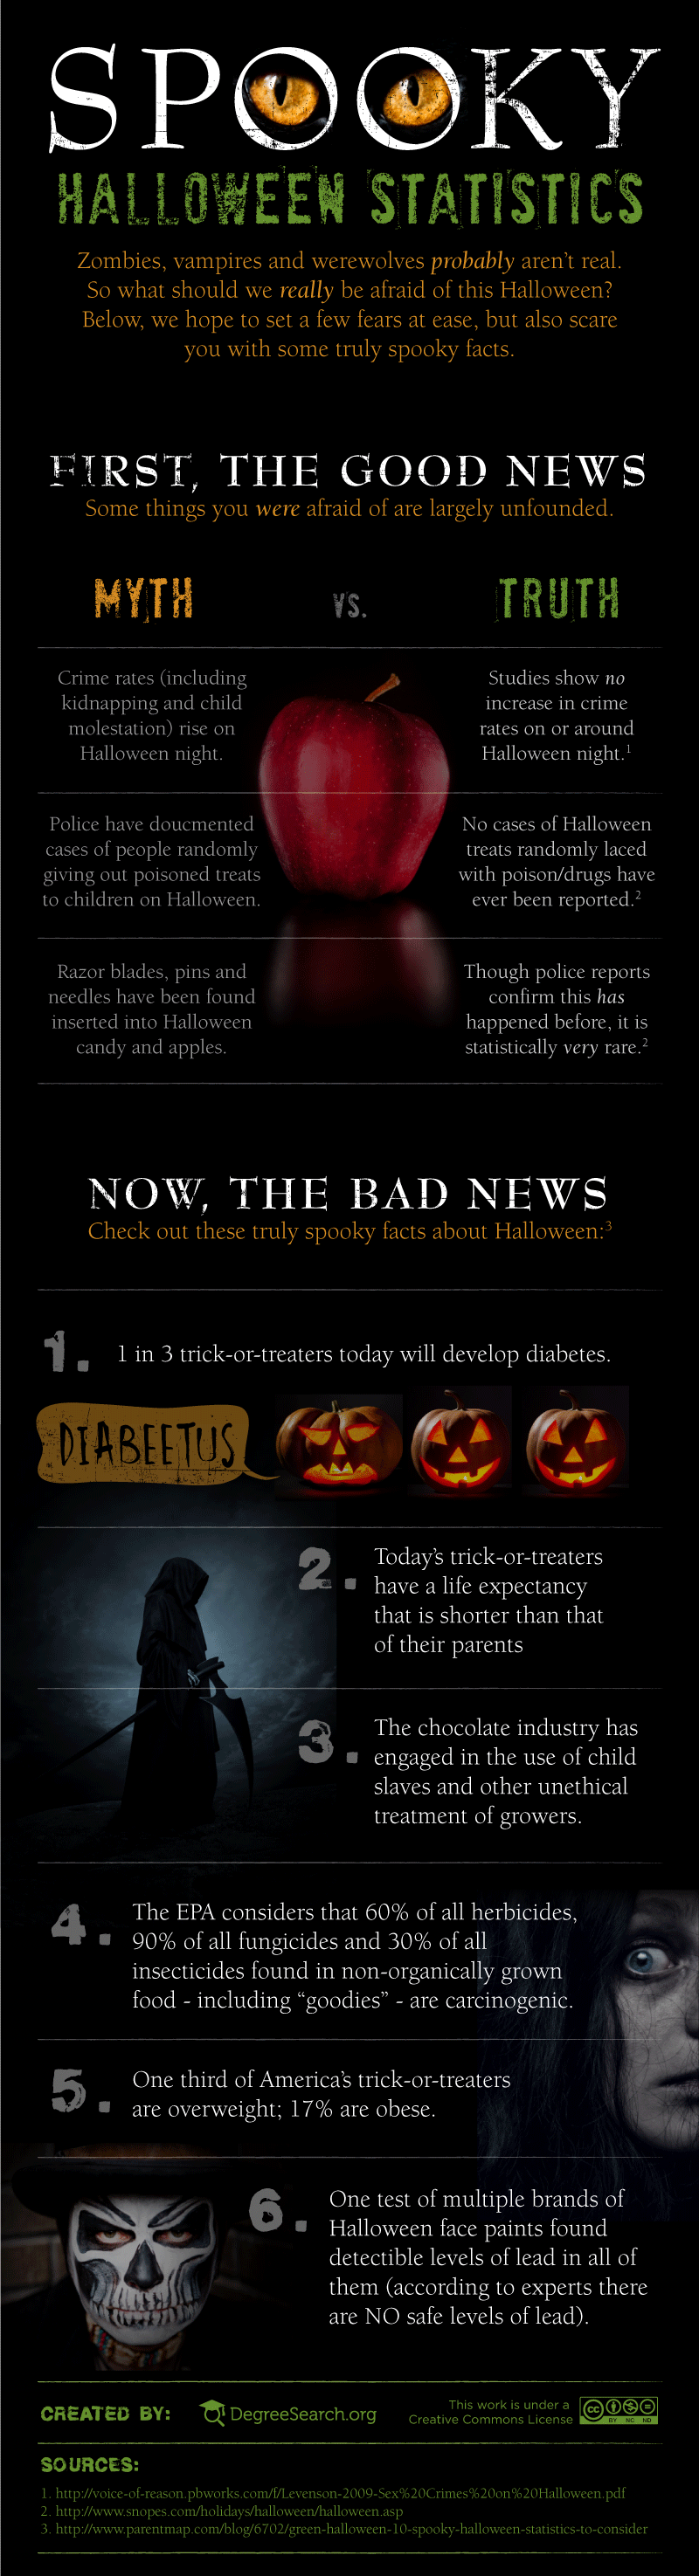 Spooky Halloween Statistics Infographic